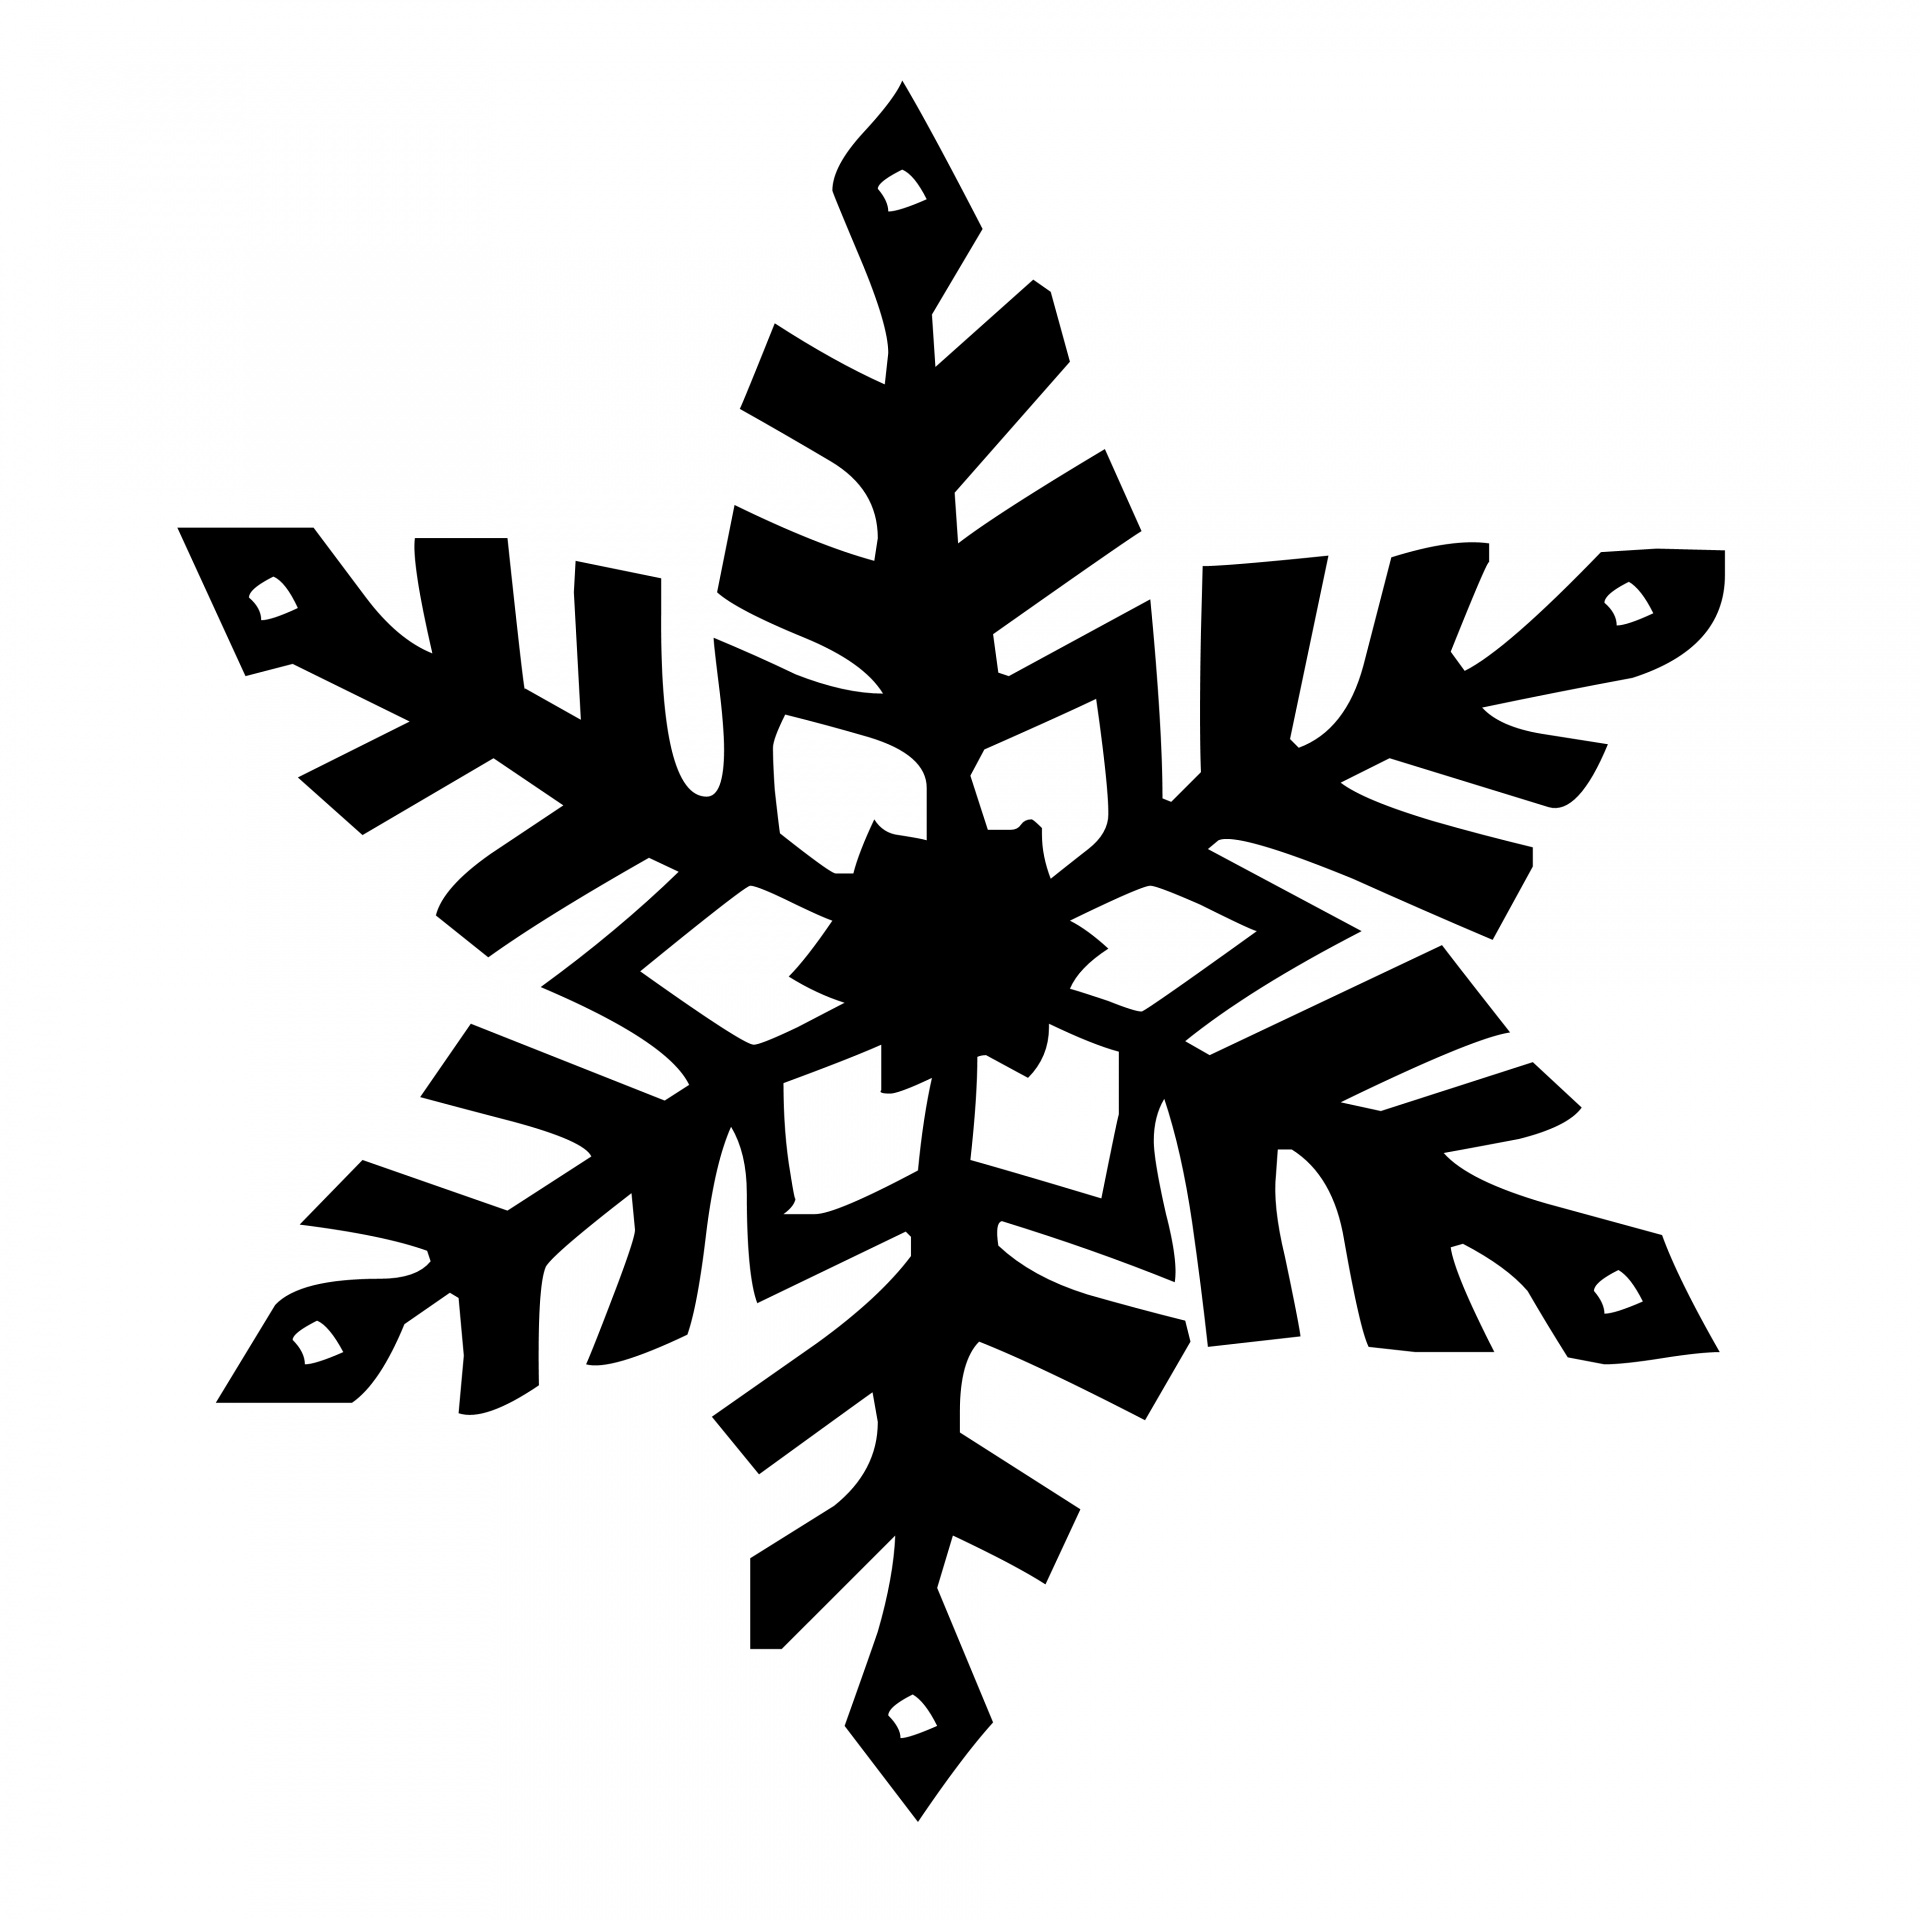 Six Arm Snowflake